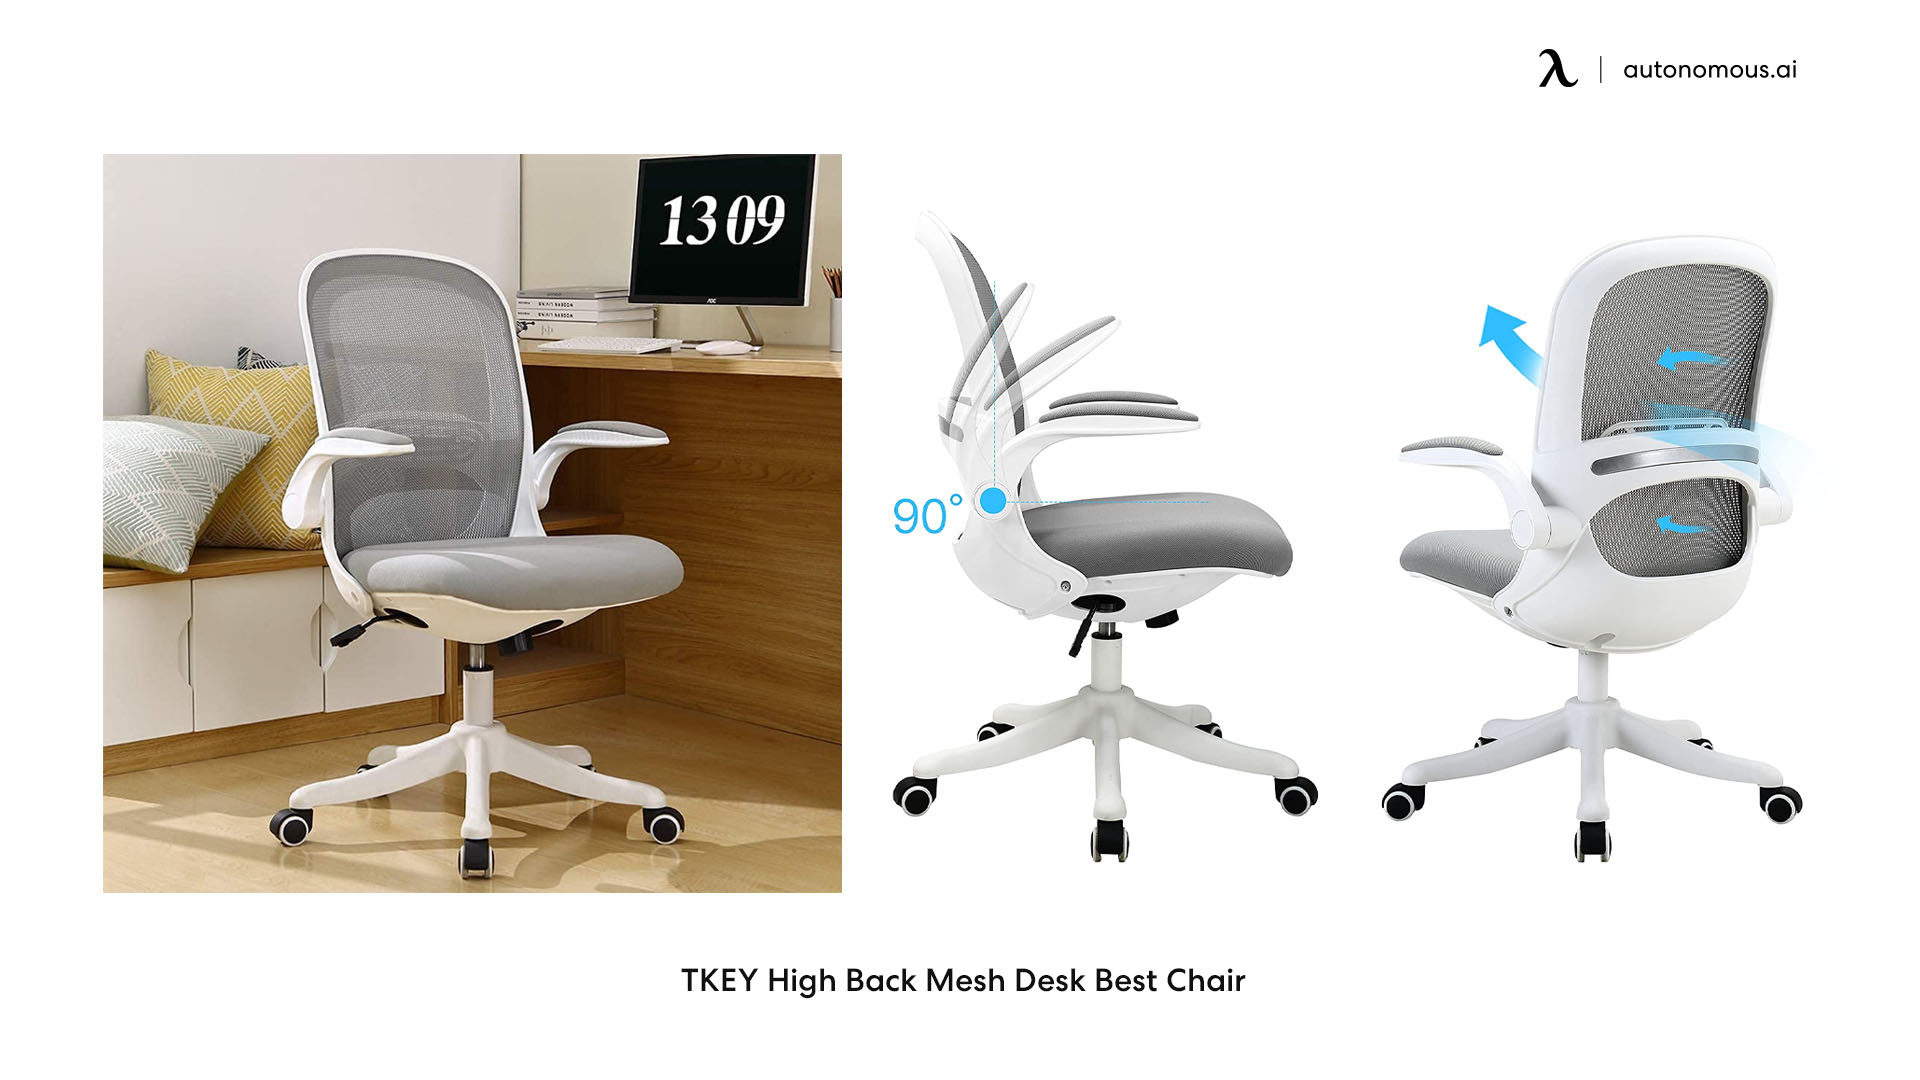 TKEY High Back Mesh Desk Best Chair